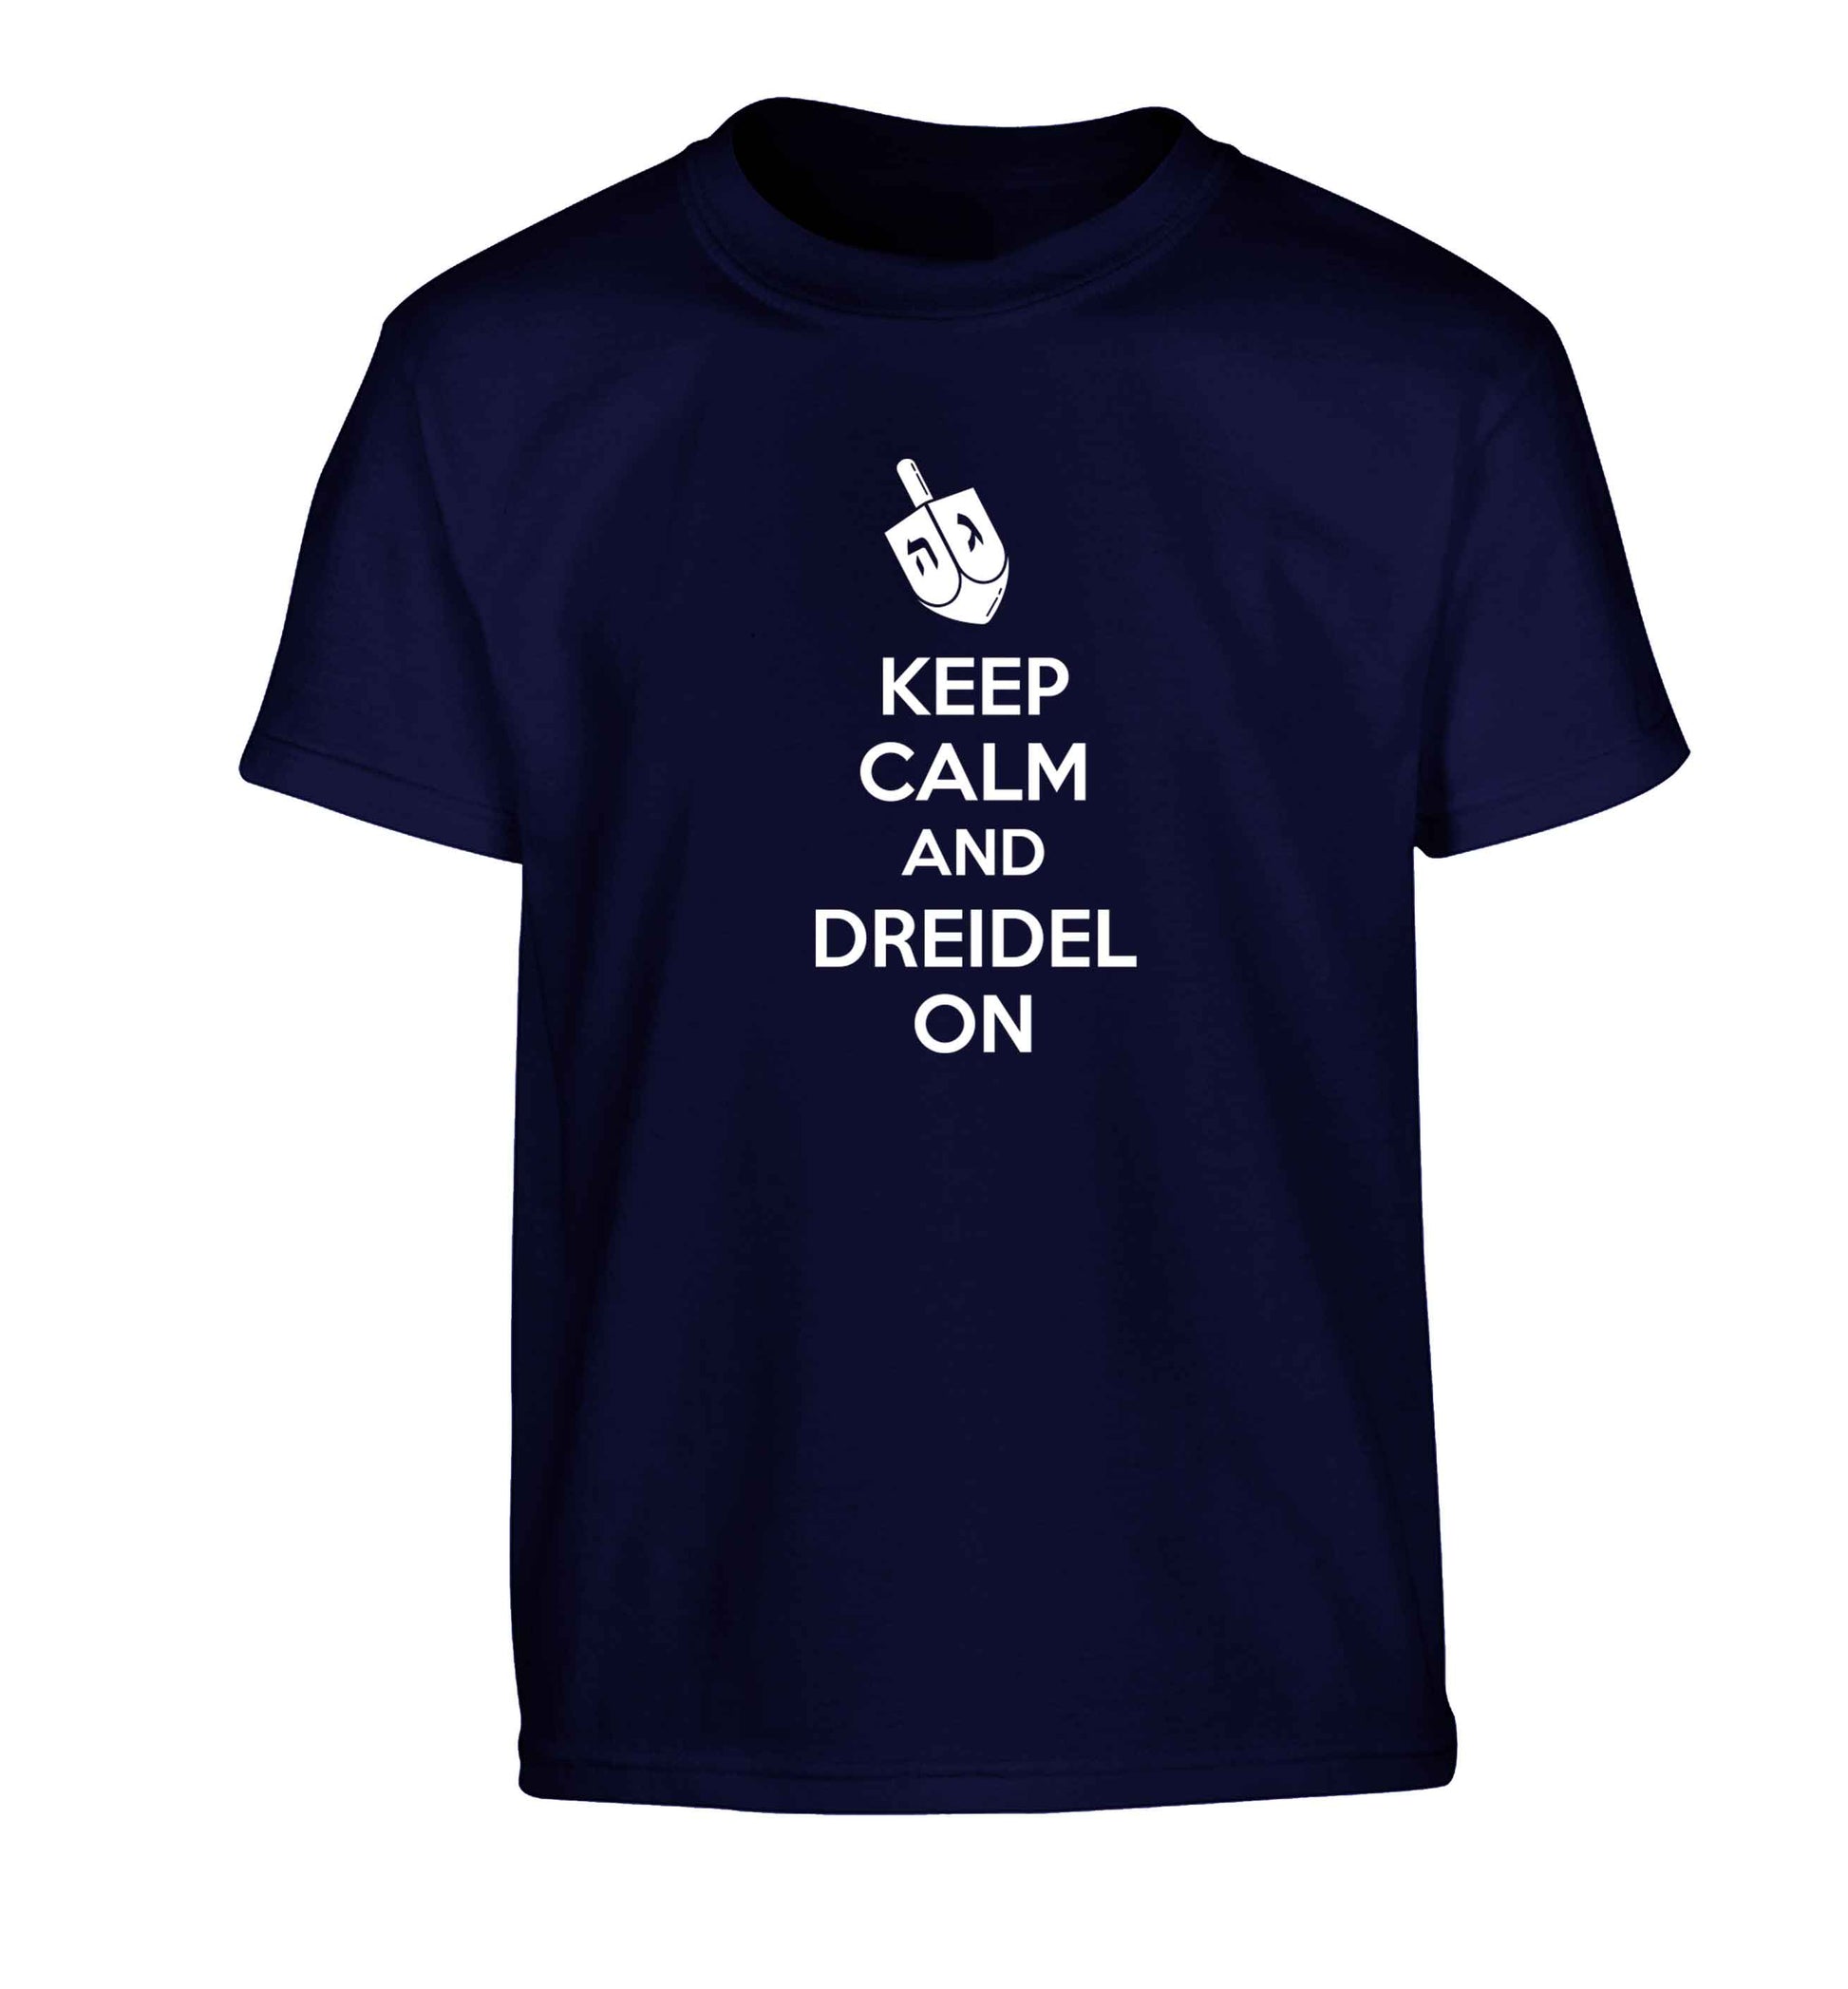 Keep calm and dreidel on Children's navy Tshirt 12-13 Years